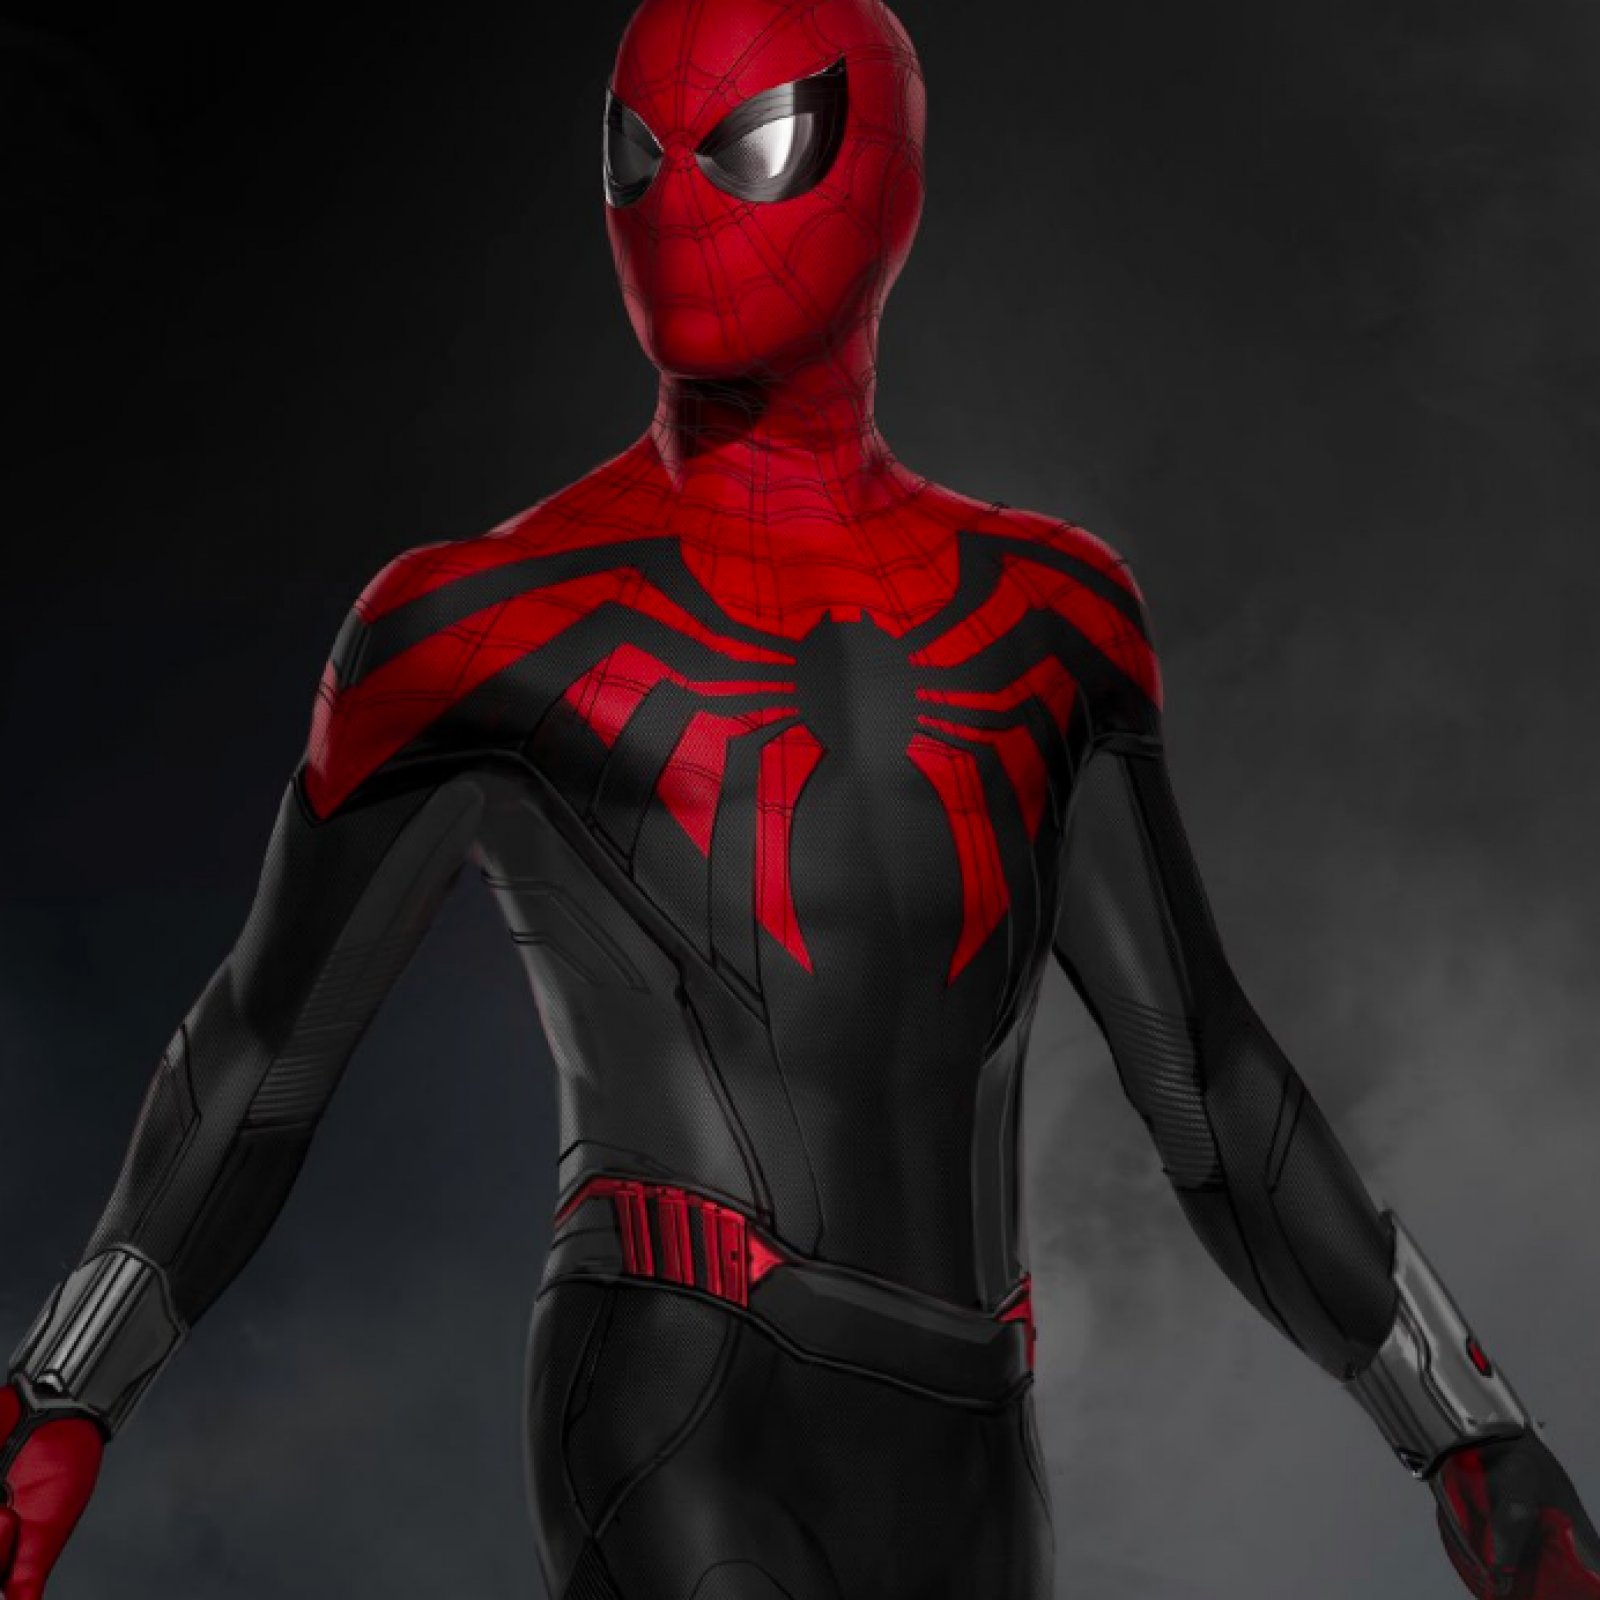 spider man suit